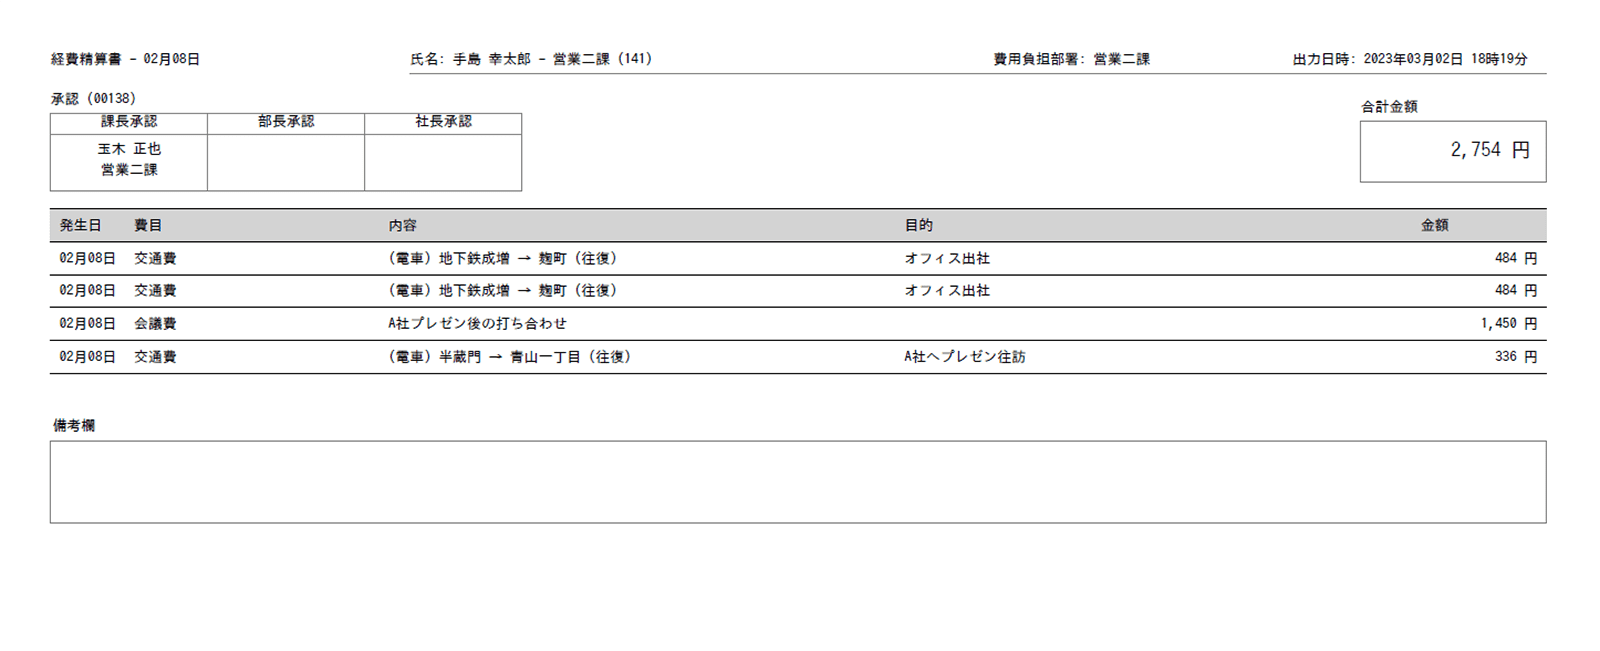 rakumo ケイヒ 帳票形式での出力イメージ